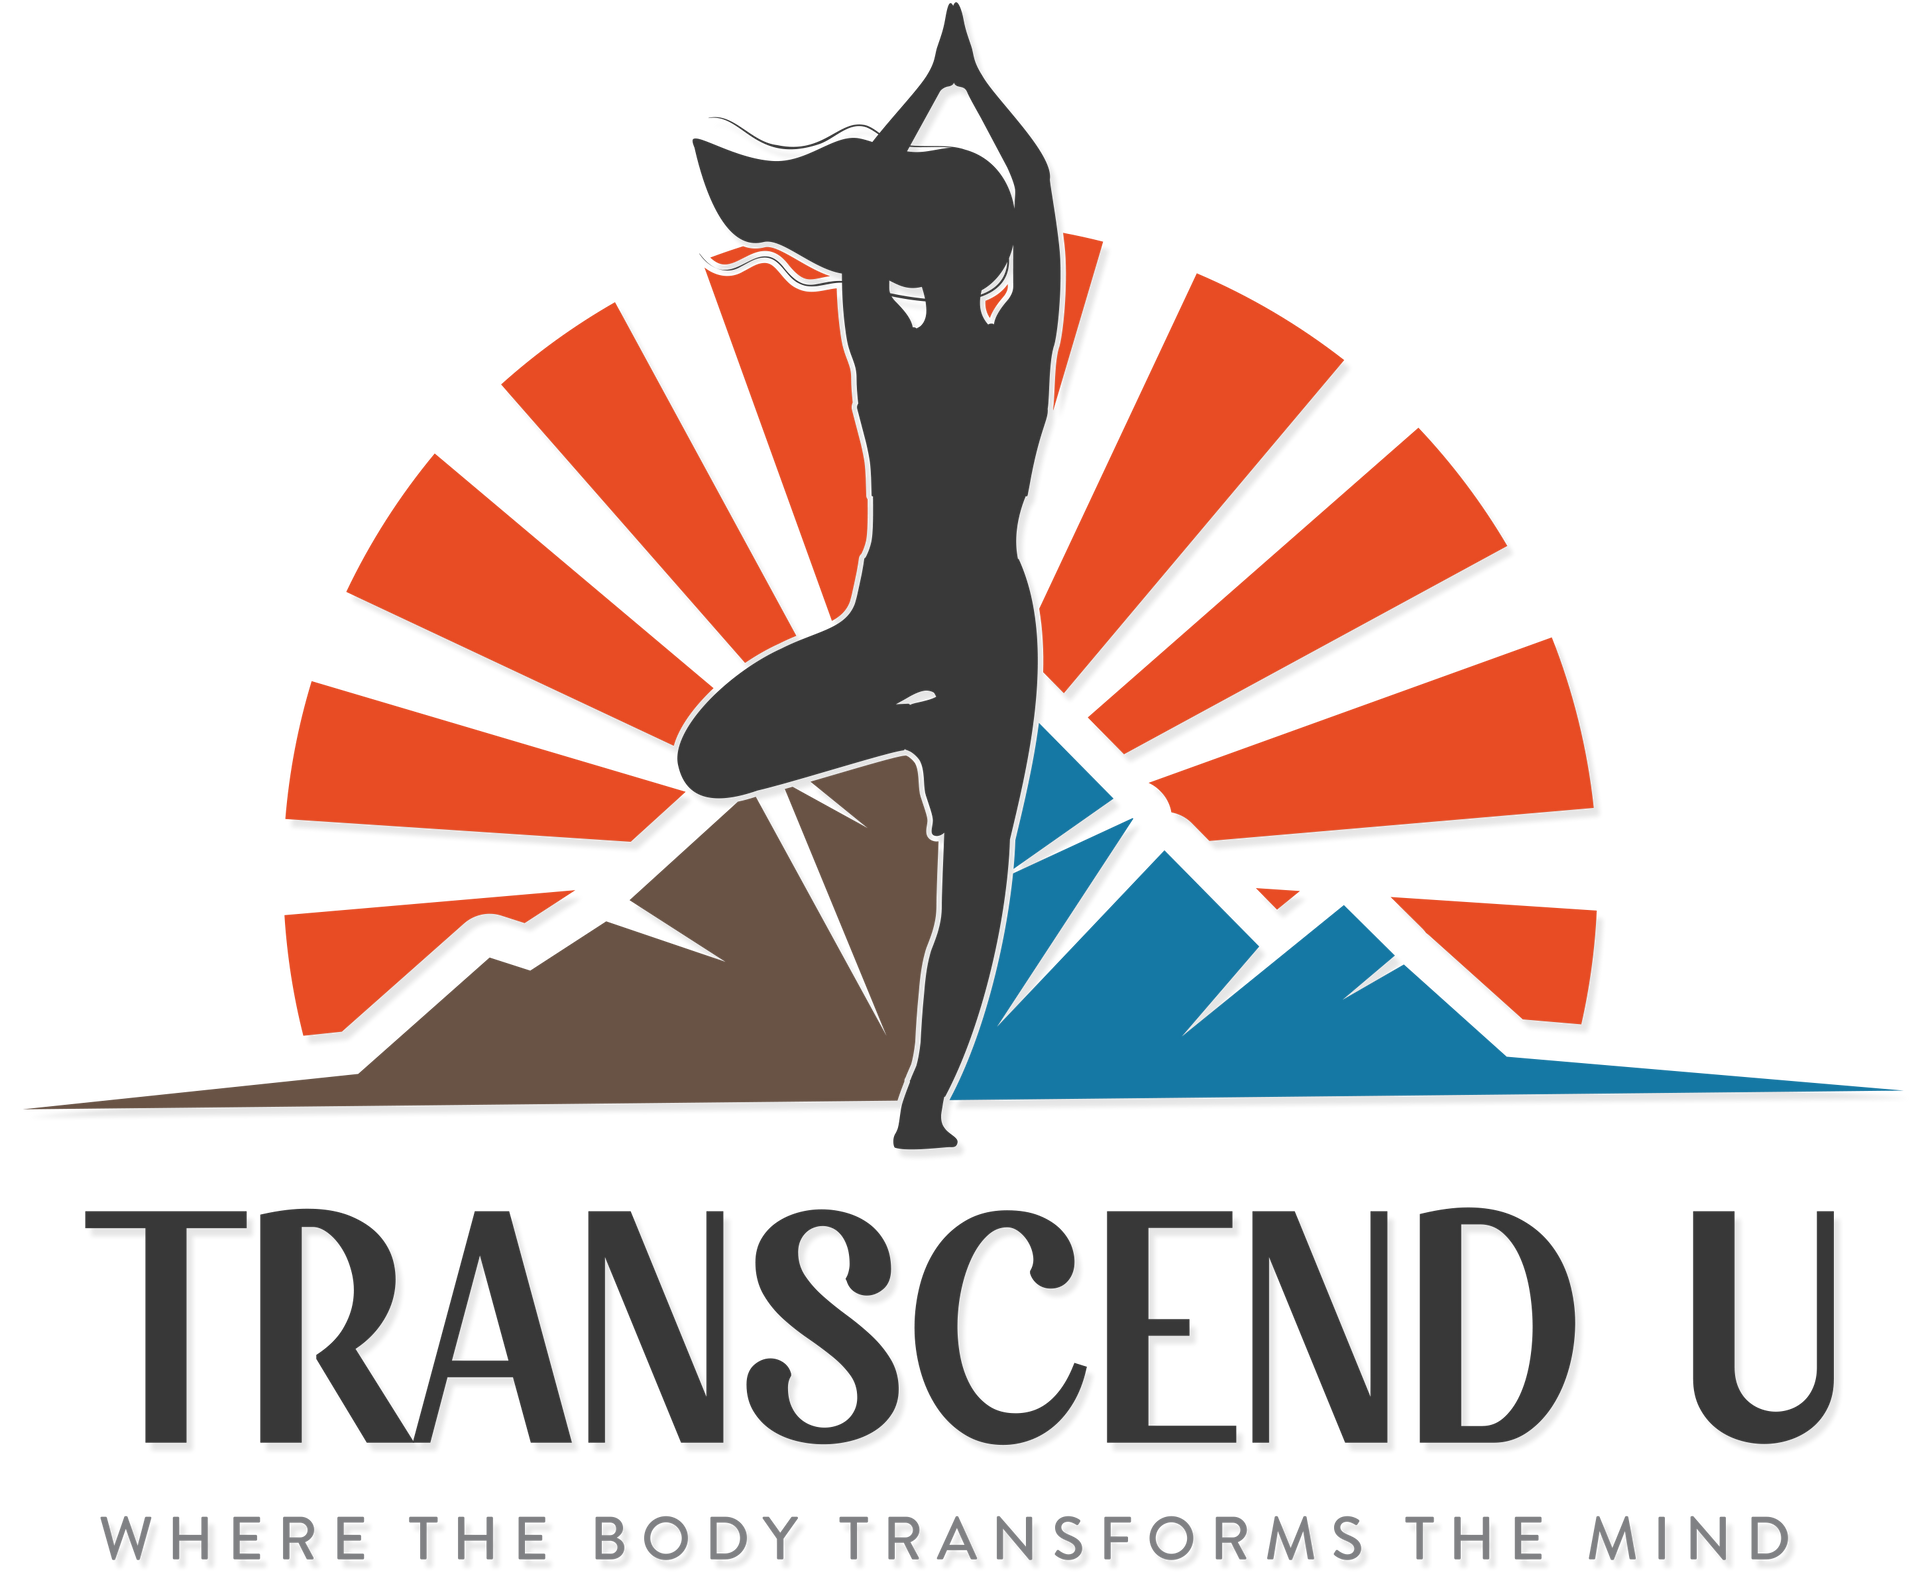 Transcend U - Where The Body Transforms The Mind